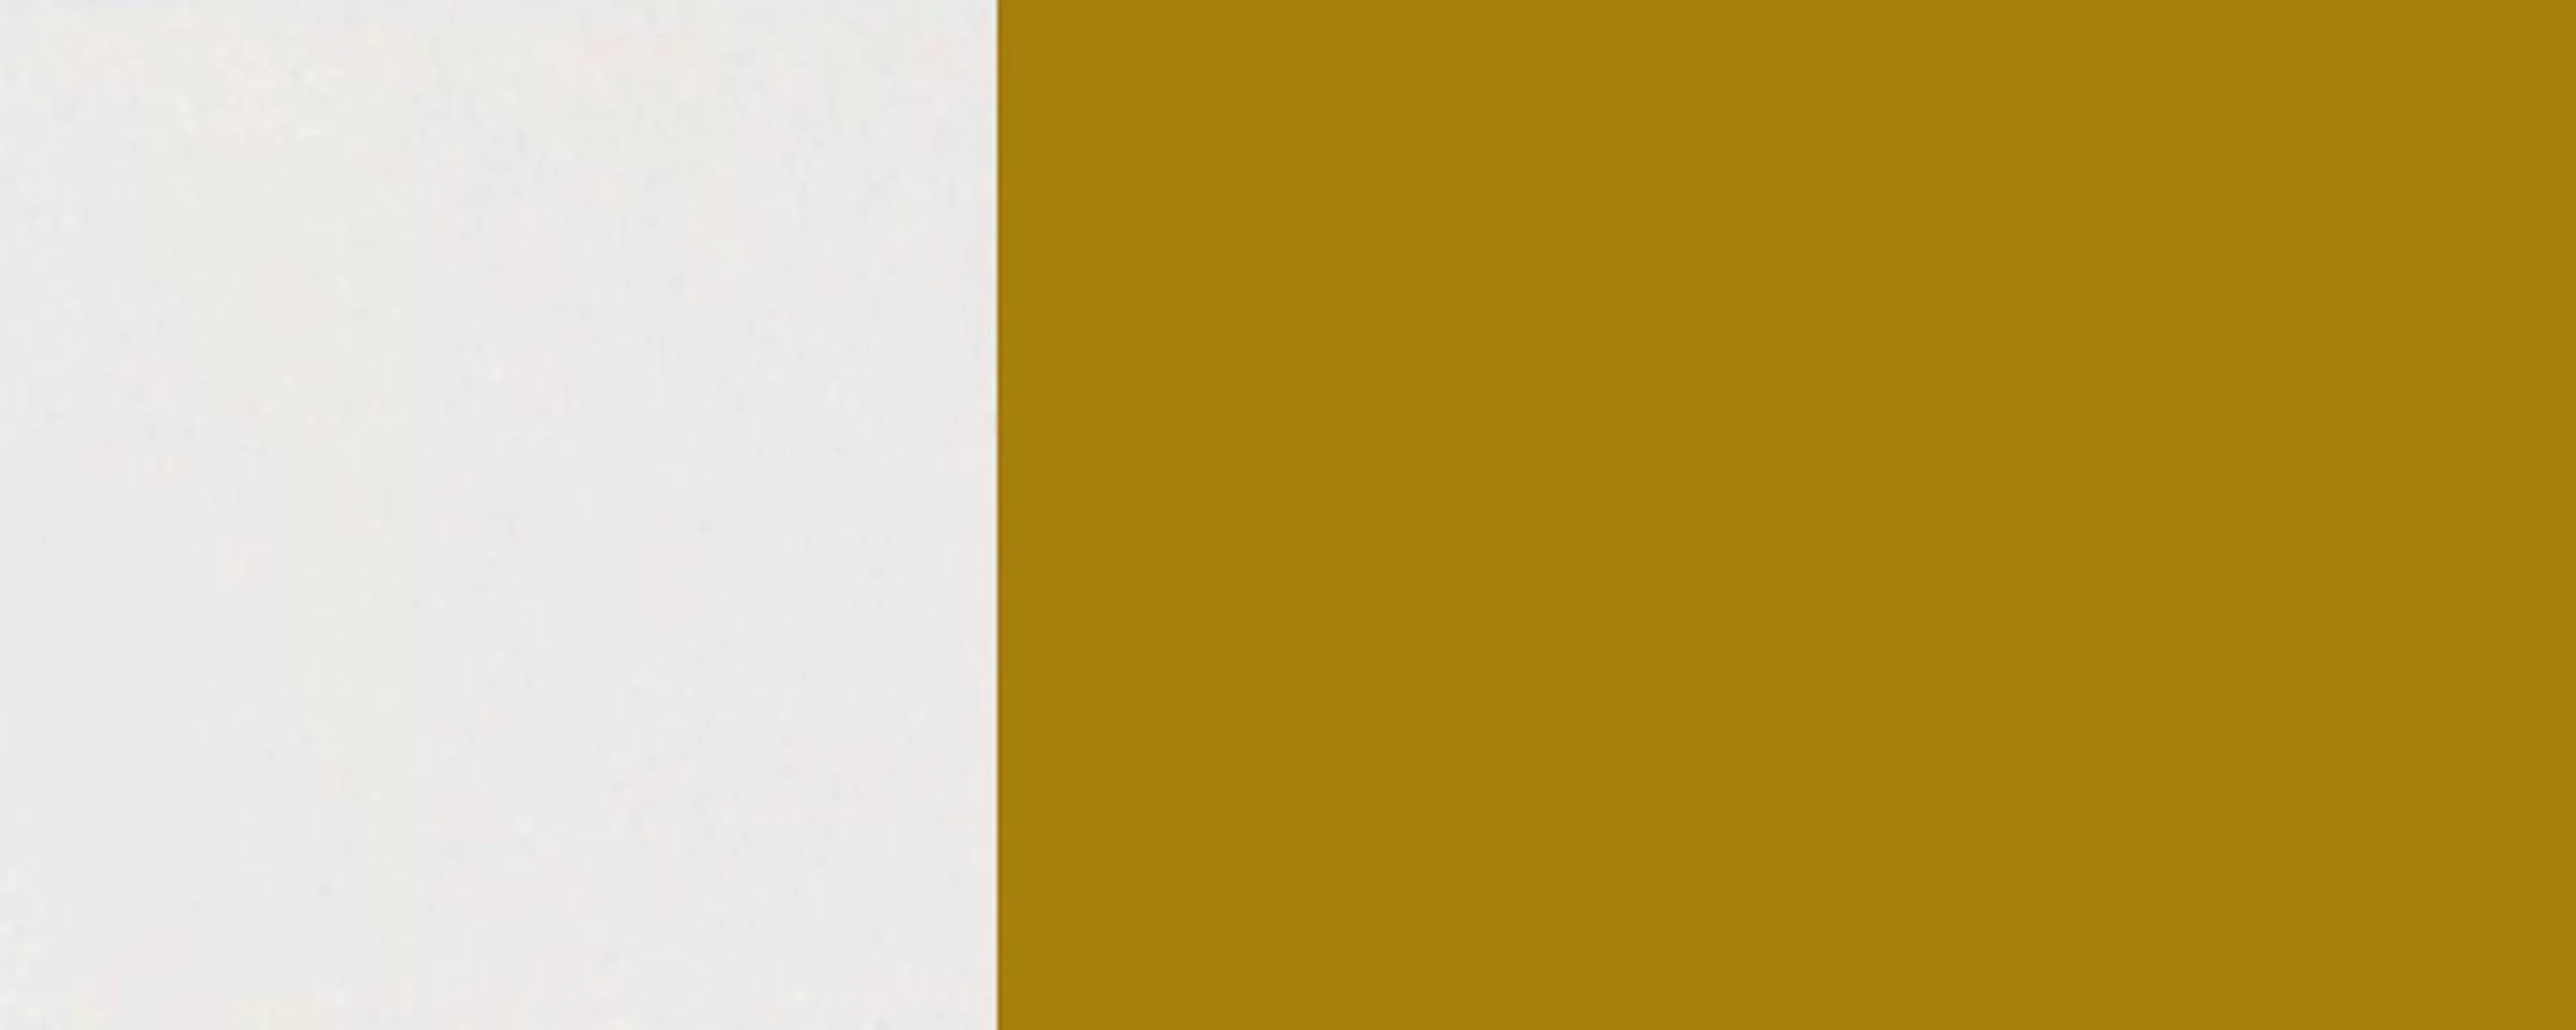 Feldmann-Wohnen Hochschrank Rimini (Rimini, 1-St) 40cm Front- & Korpusfarbe günstig online kaufen